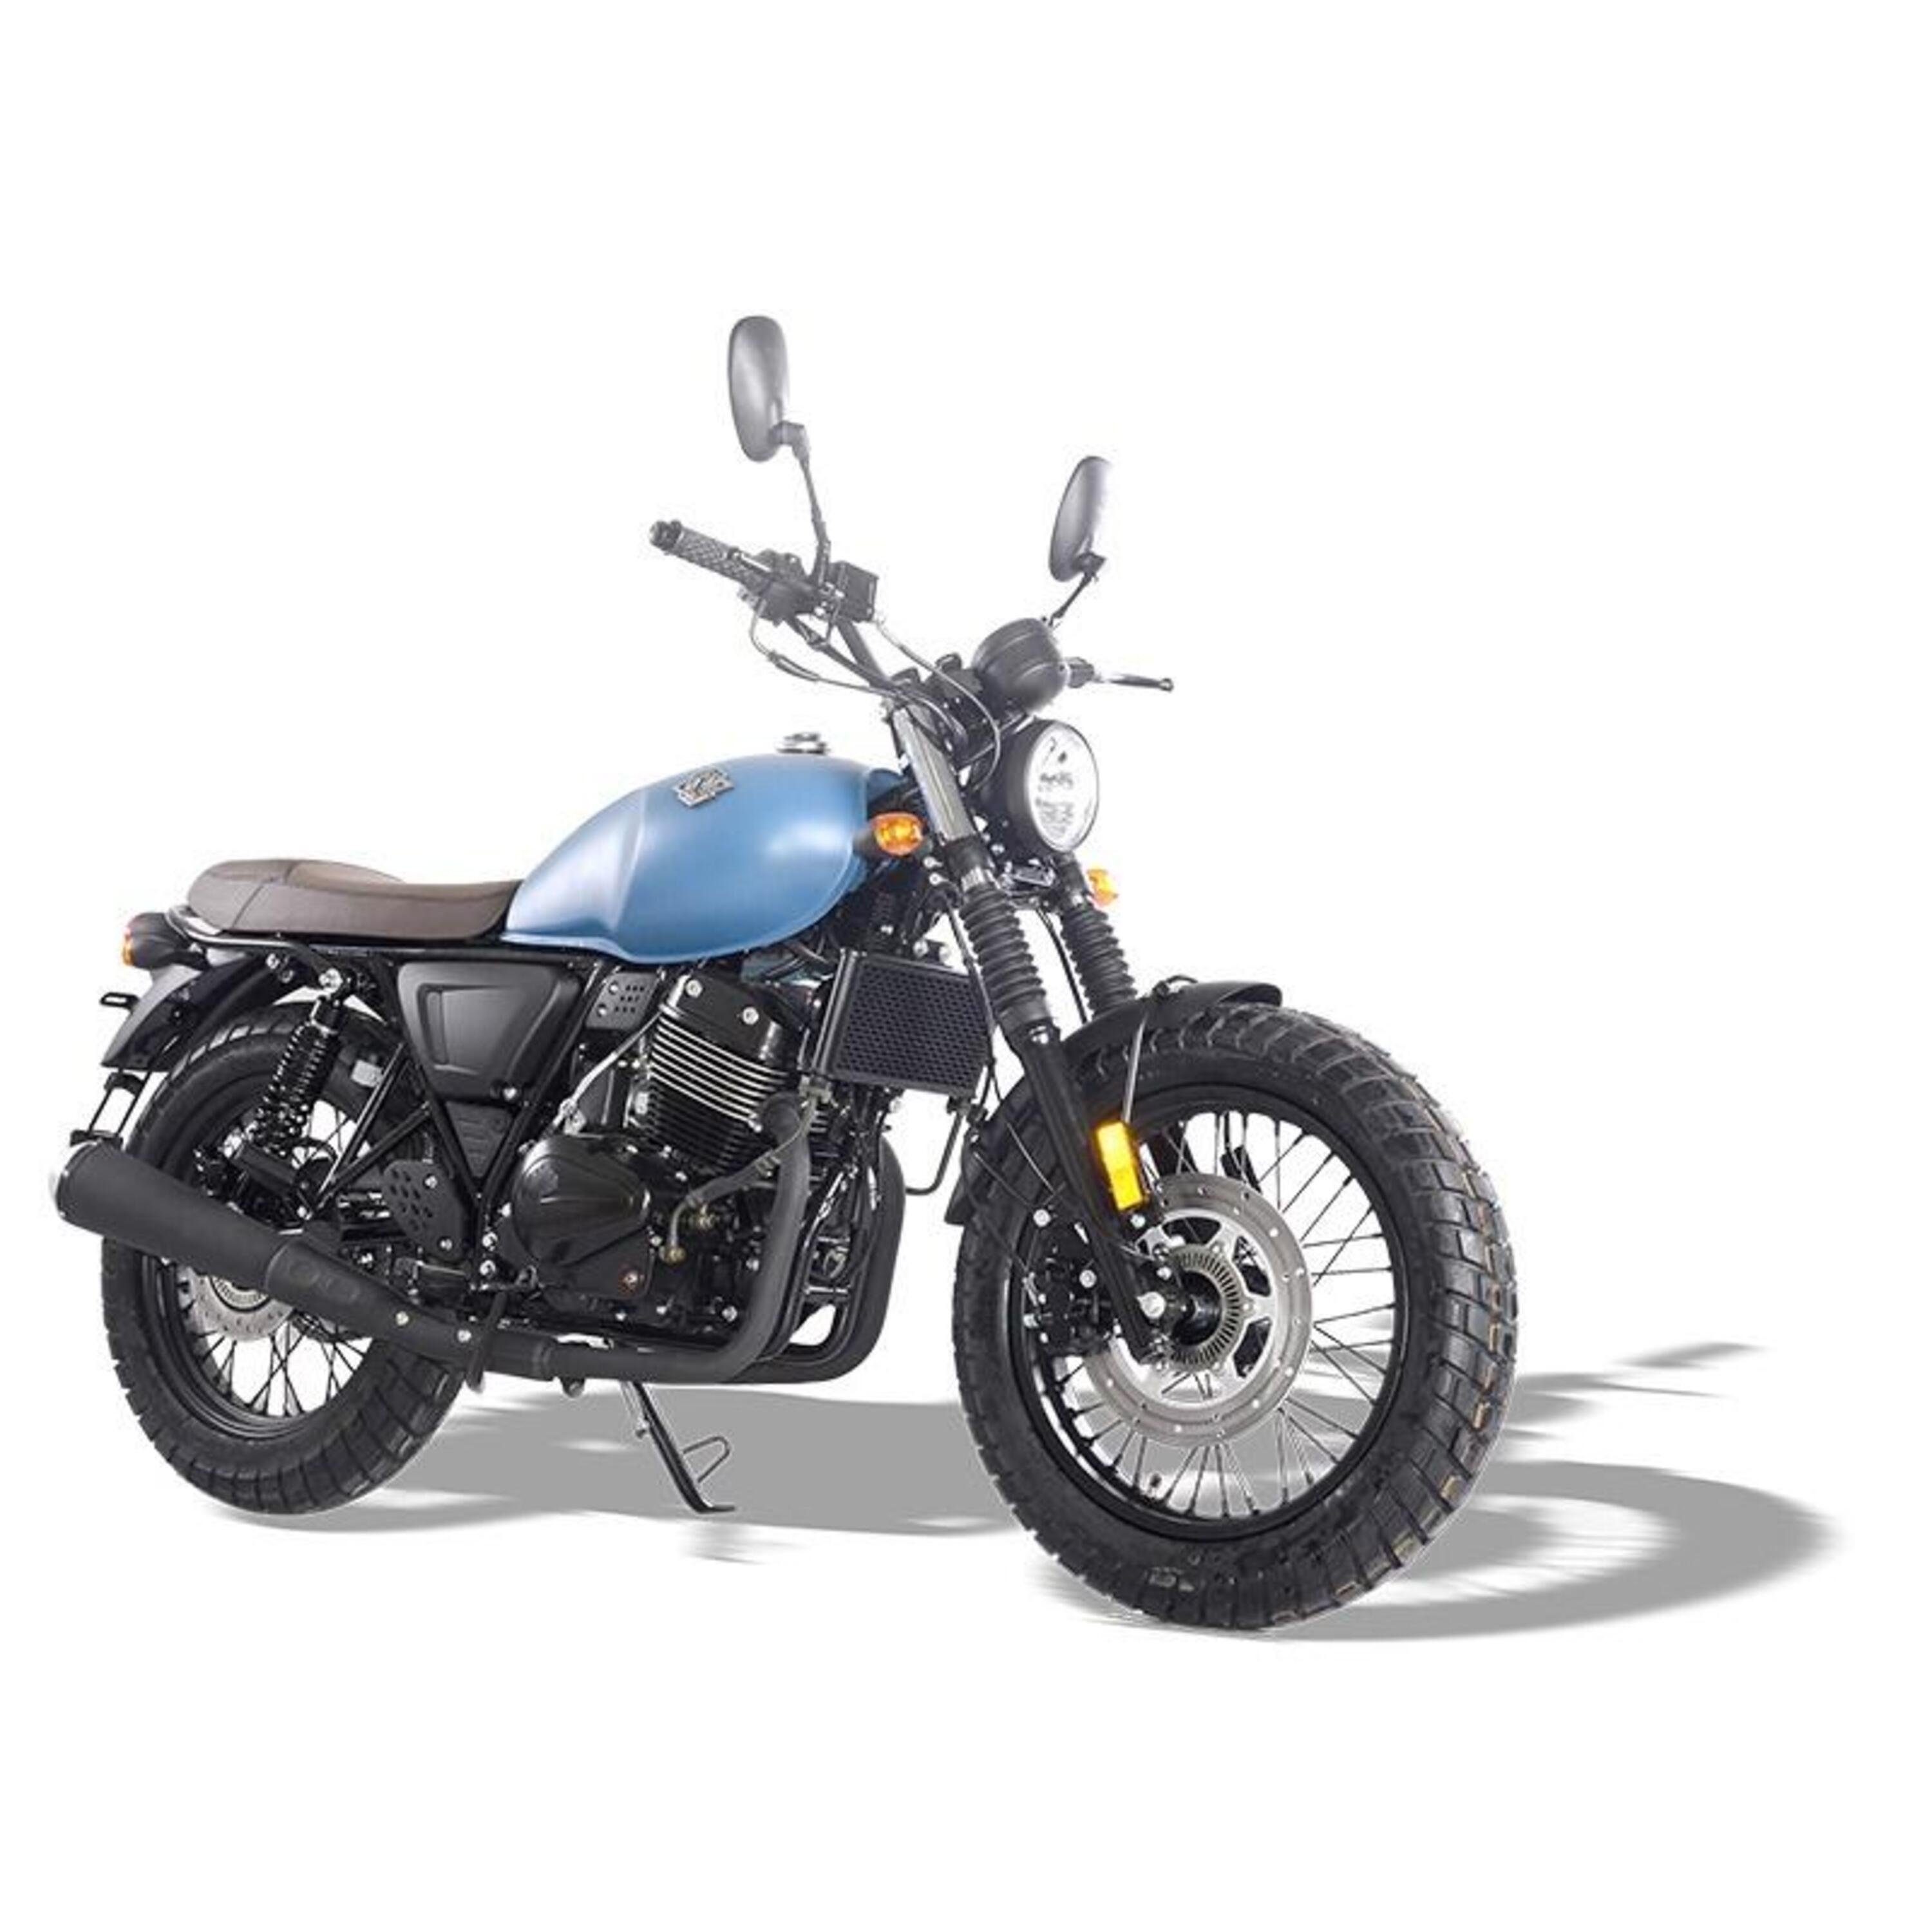 Archive Motorcycle AM 90 250 AM 90 250 Scrambler (2020)